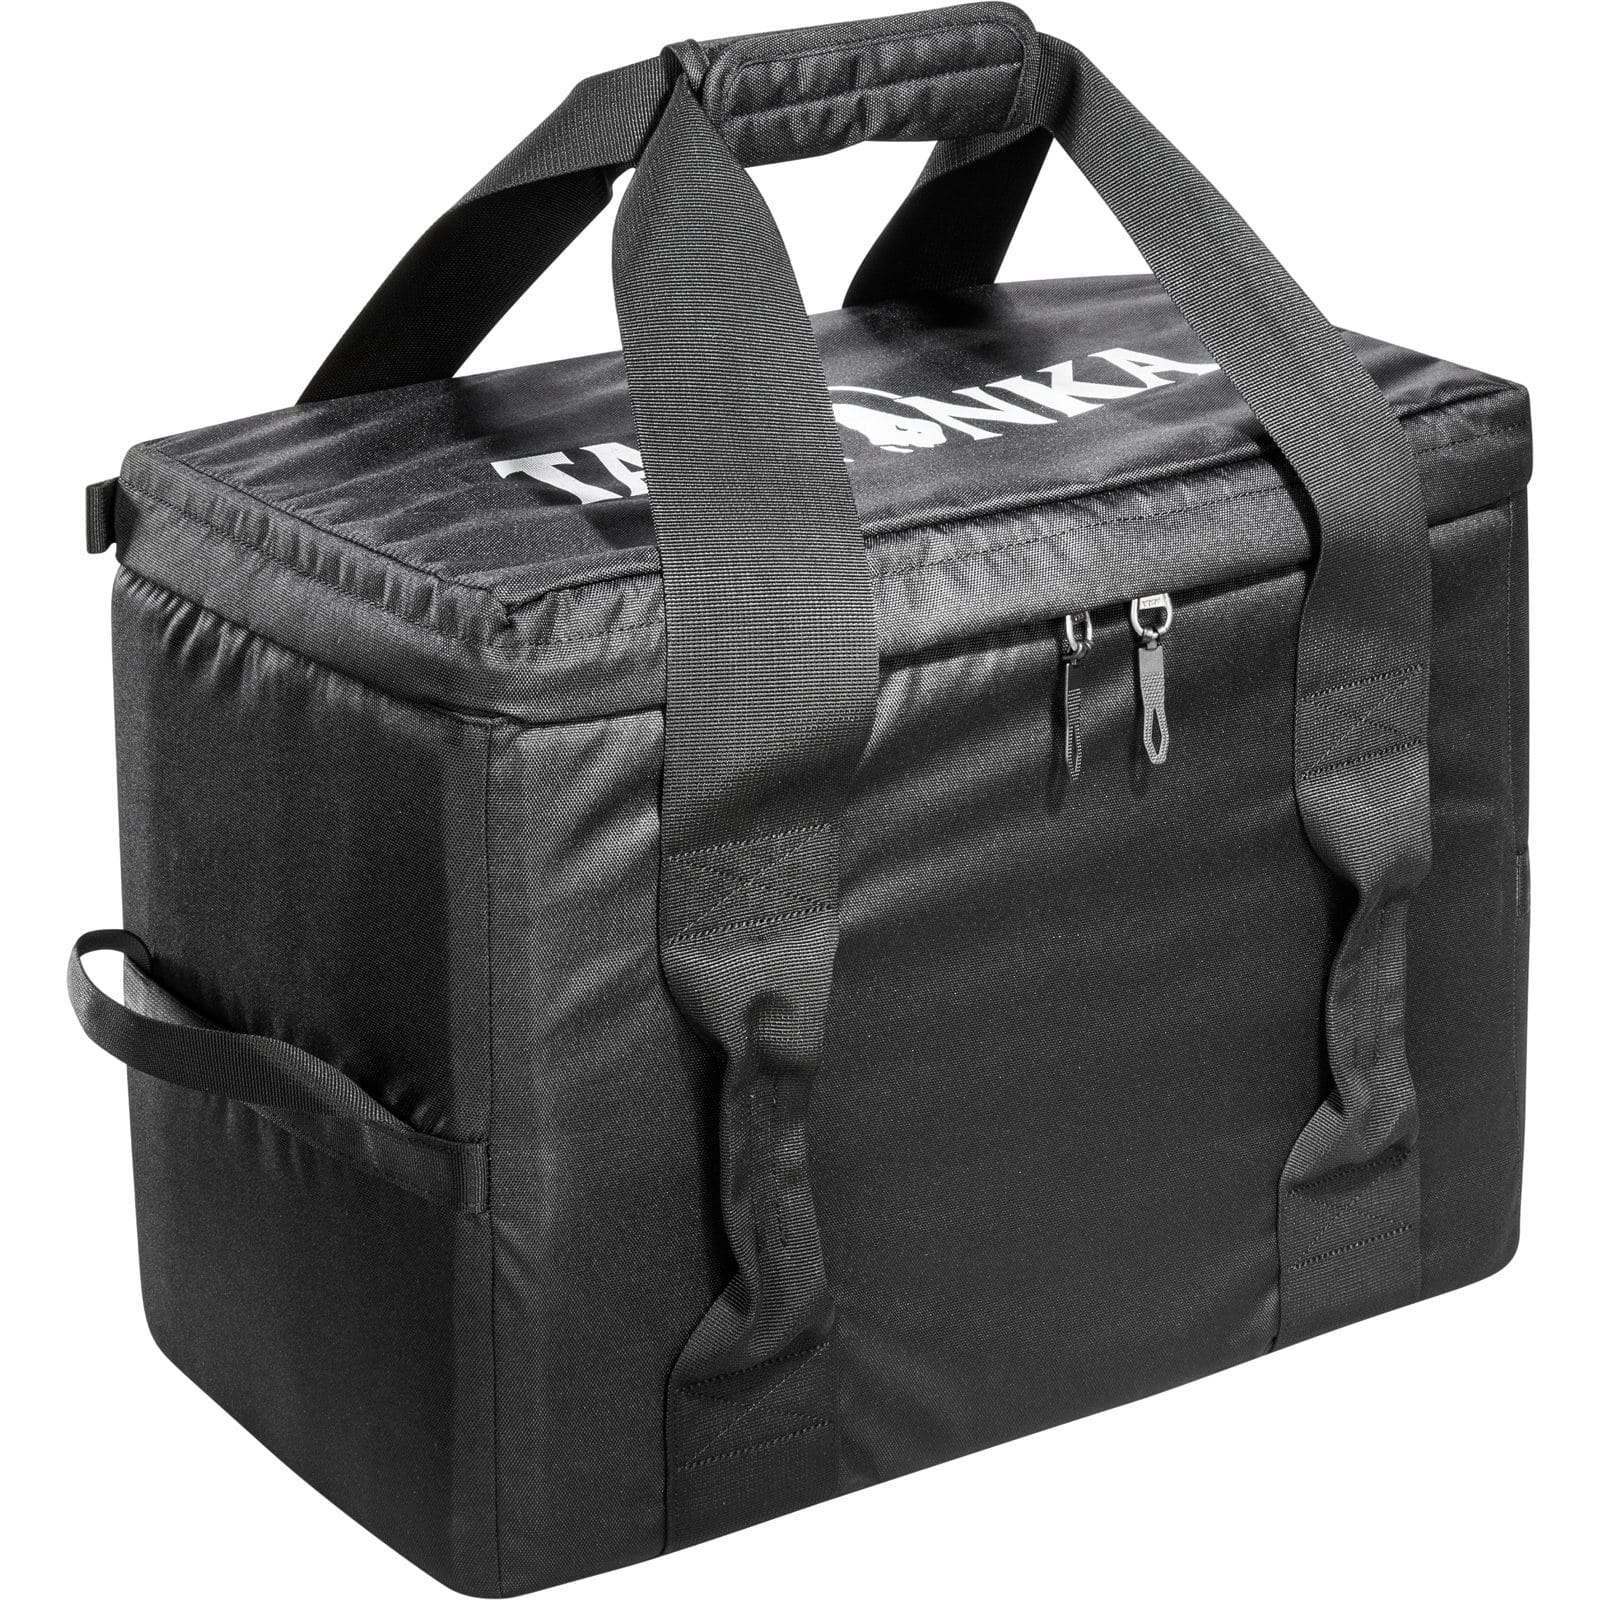 https://outdoortrends3.shop-cdn.com/media/image/4f/65/ed/tatonka-gear-bag-40-transporttasche-tat-1946-040-_0.jpg